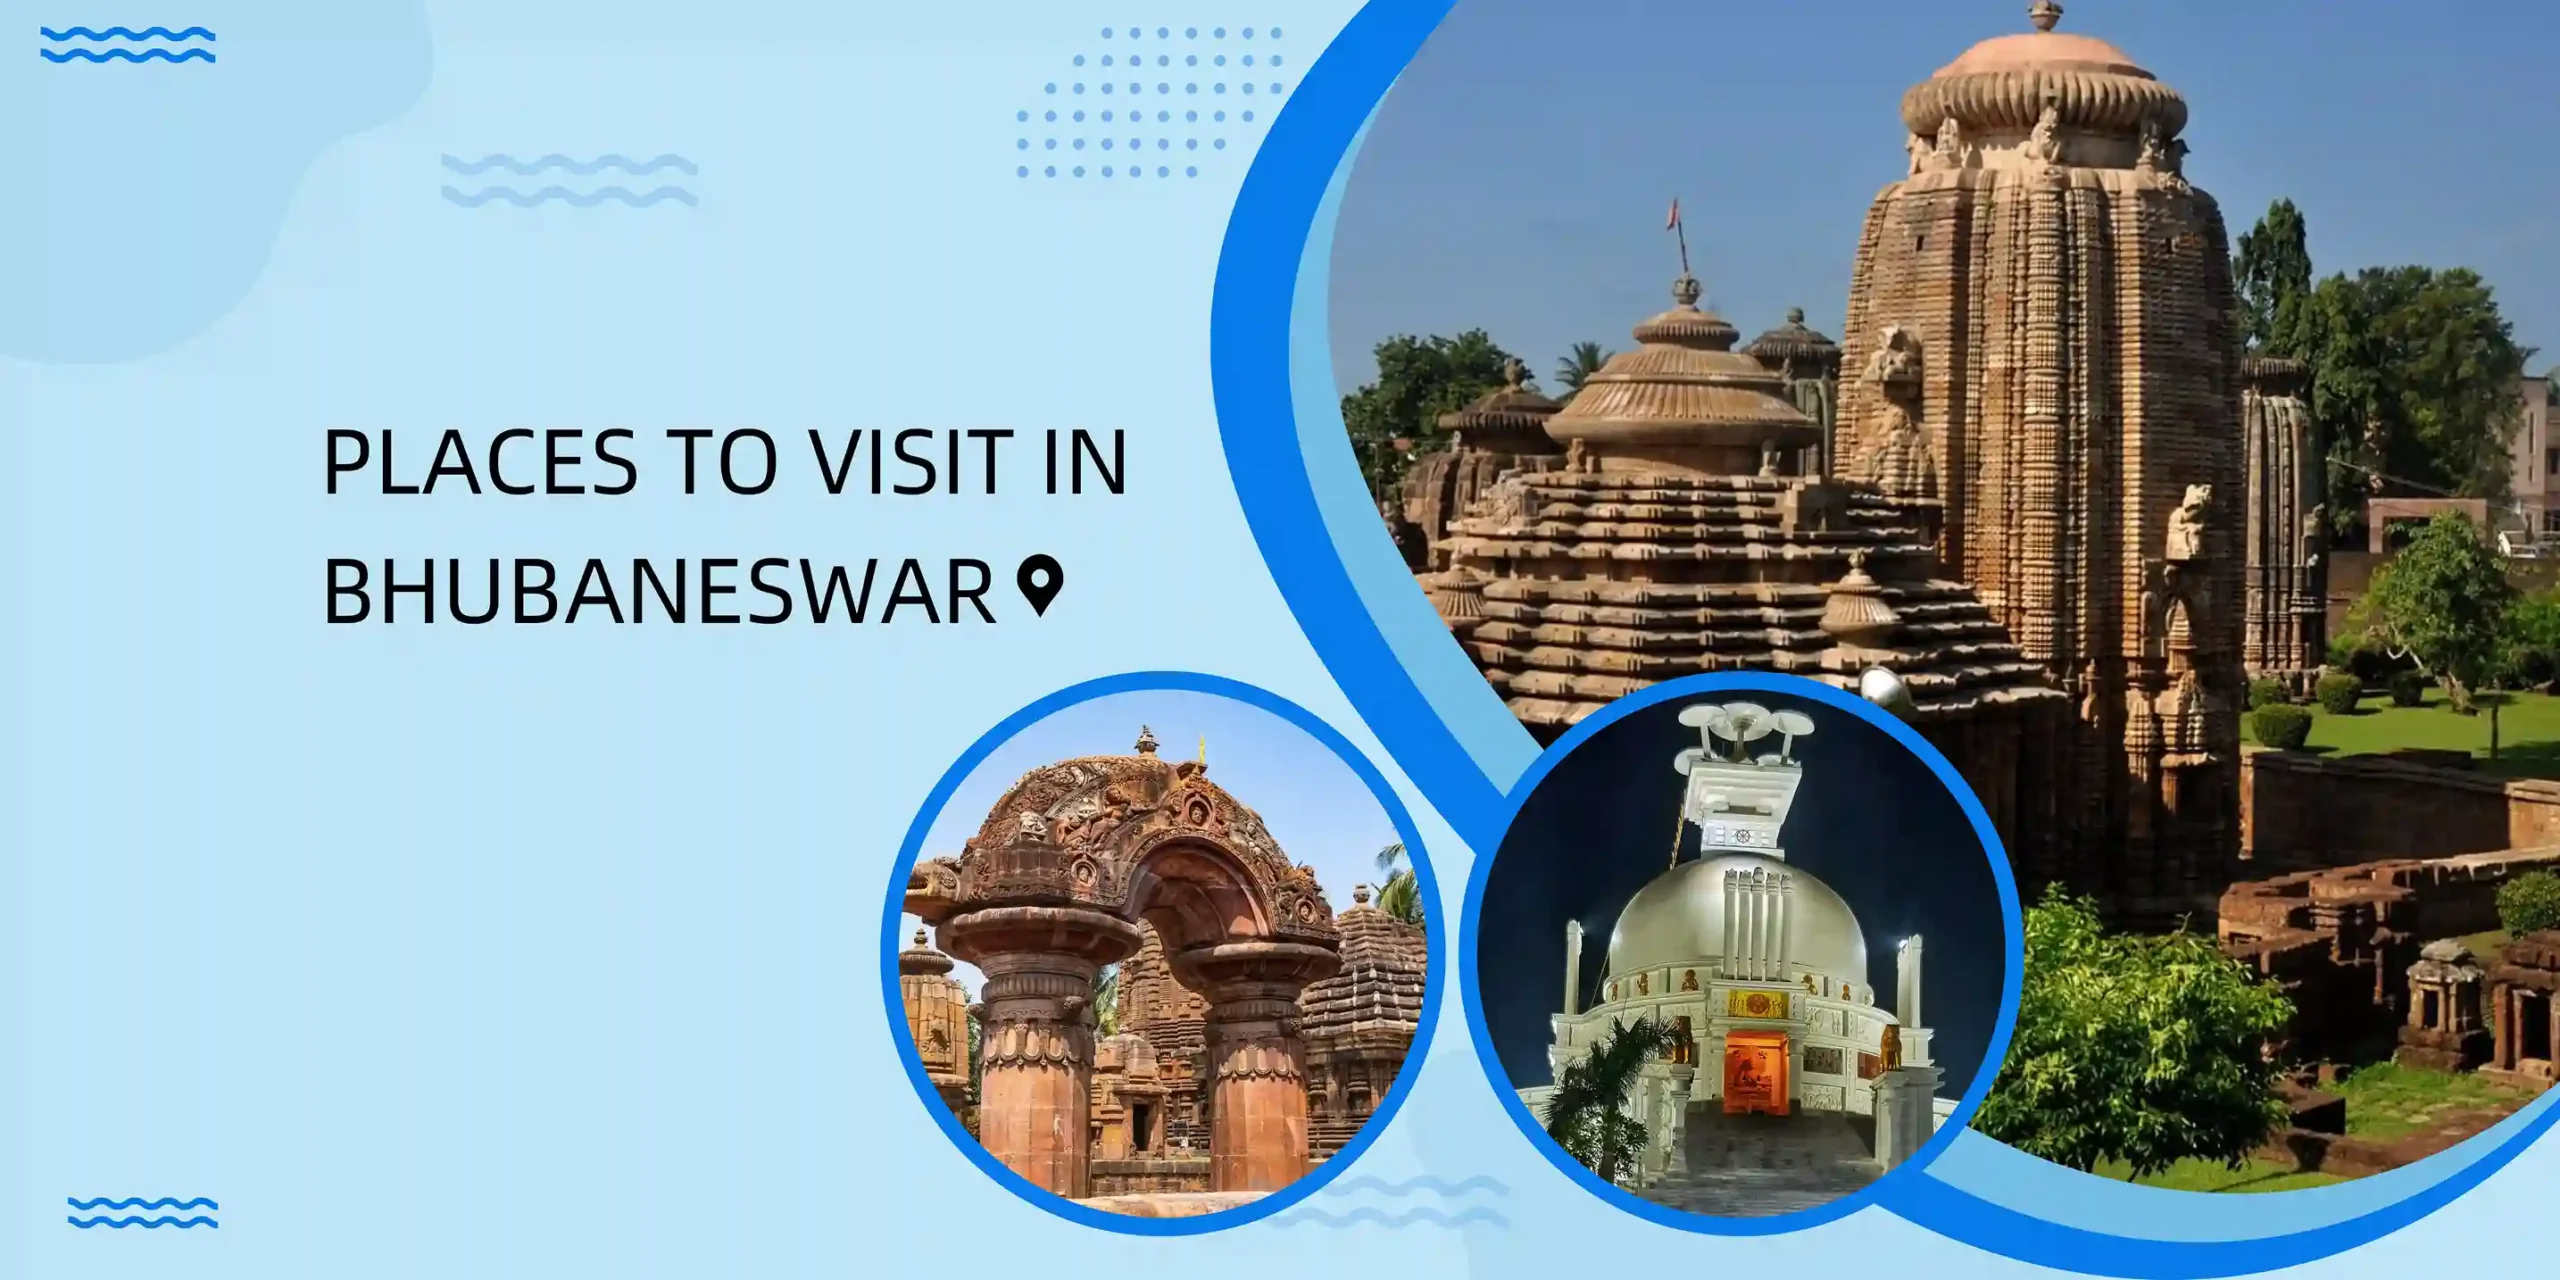 Places to visit in Bhubaneswar